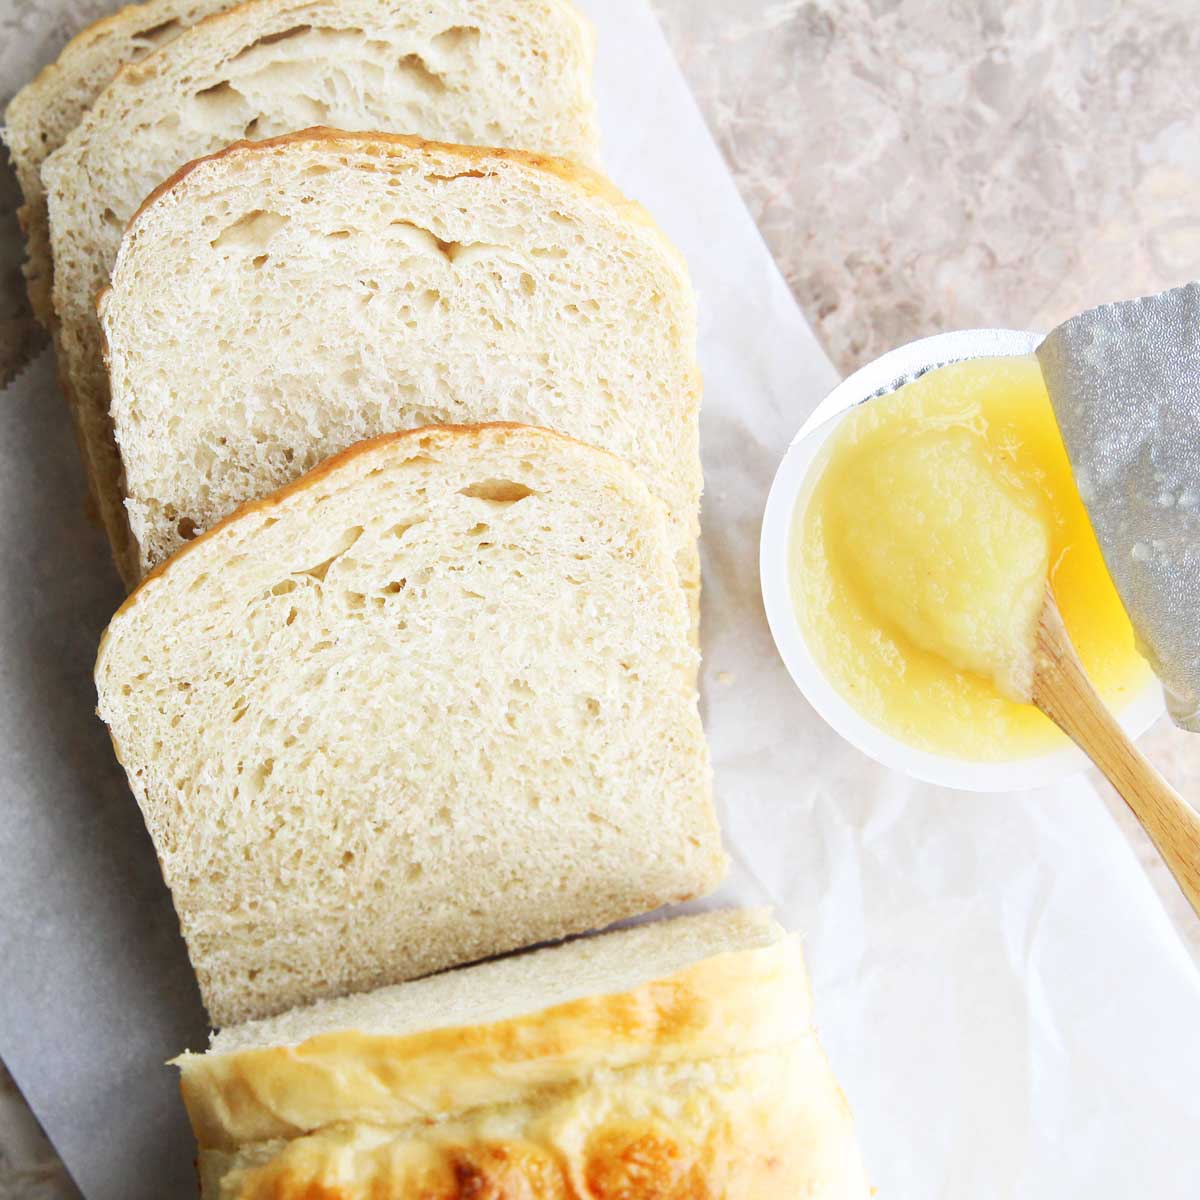 Applesauce Yeast Bread (A Healthier Recipe for White Bread) - healthy hawaiian rolls